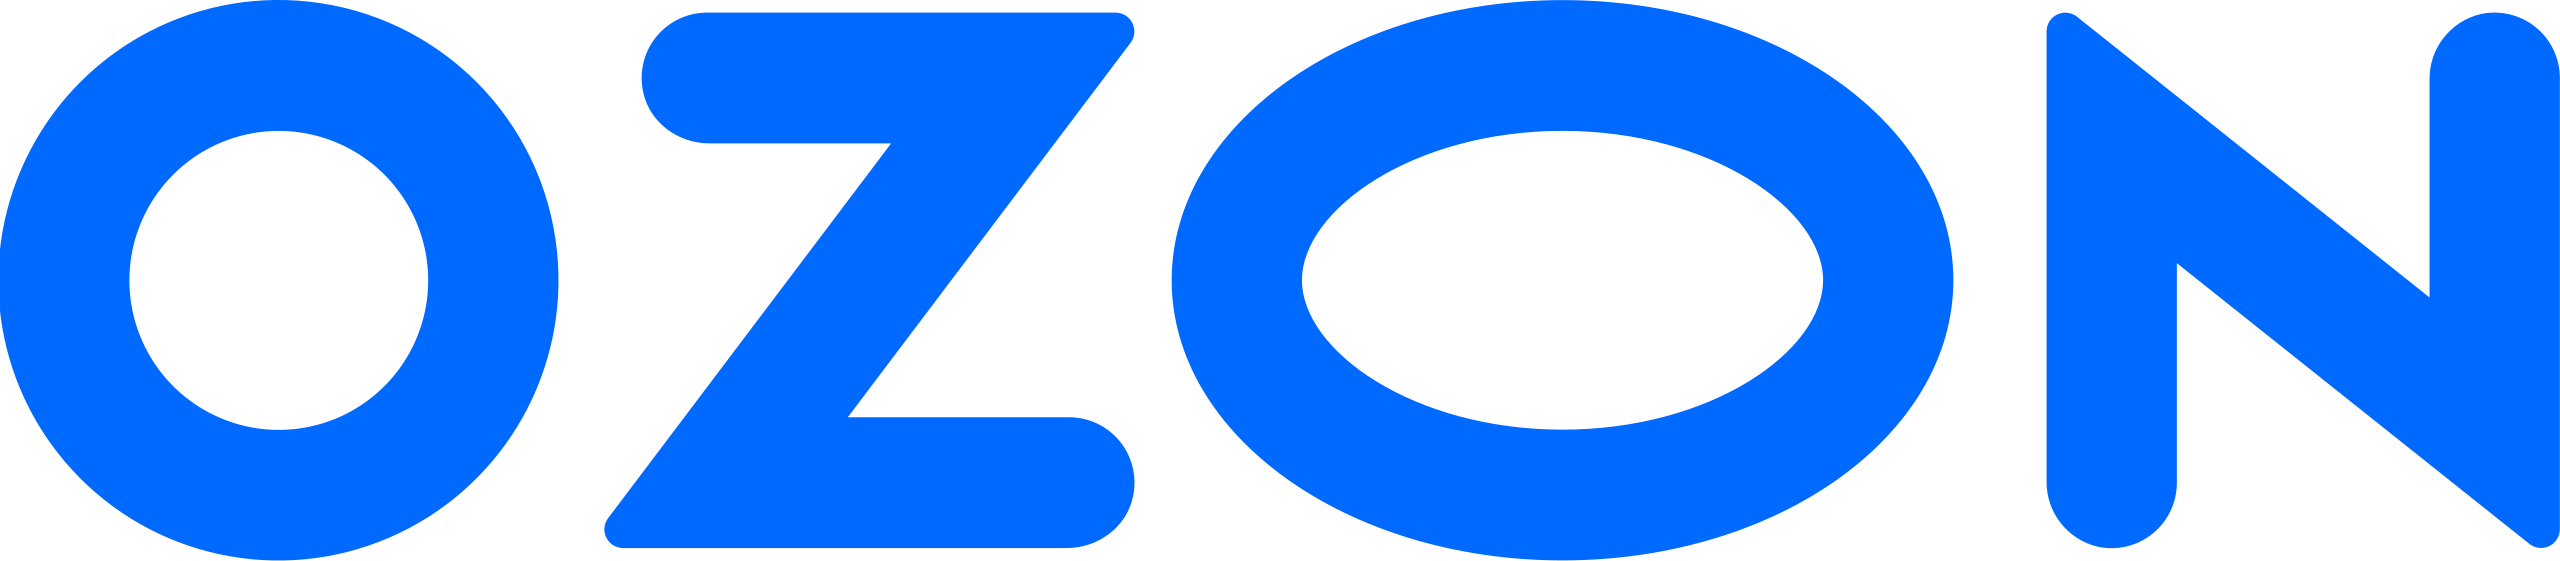 Логотип оттаявший. Озон логотип на прозрачном фоне. OZON логотип вектор. Озен. OZON логотип прозрачный.